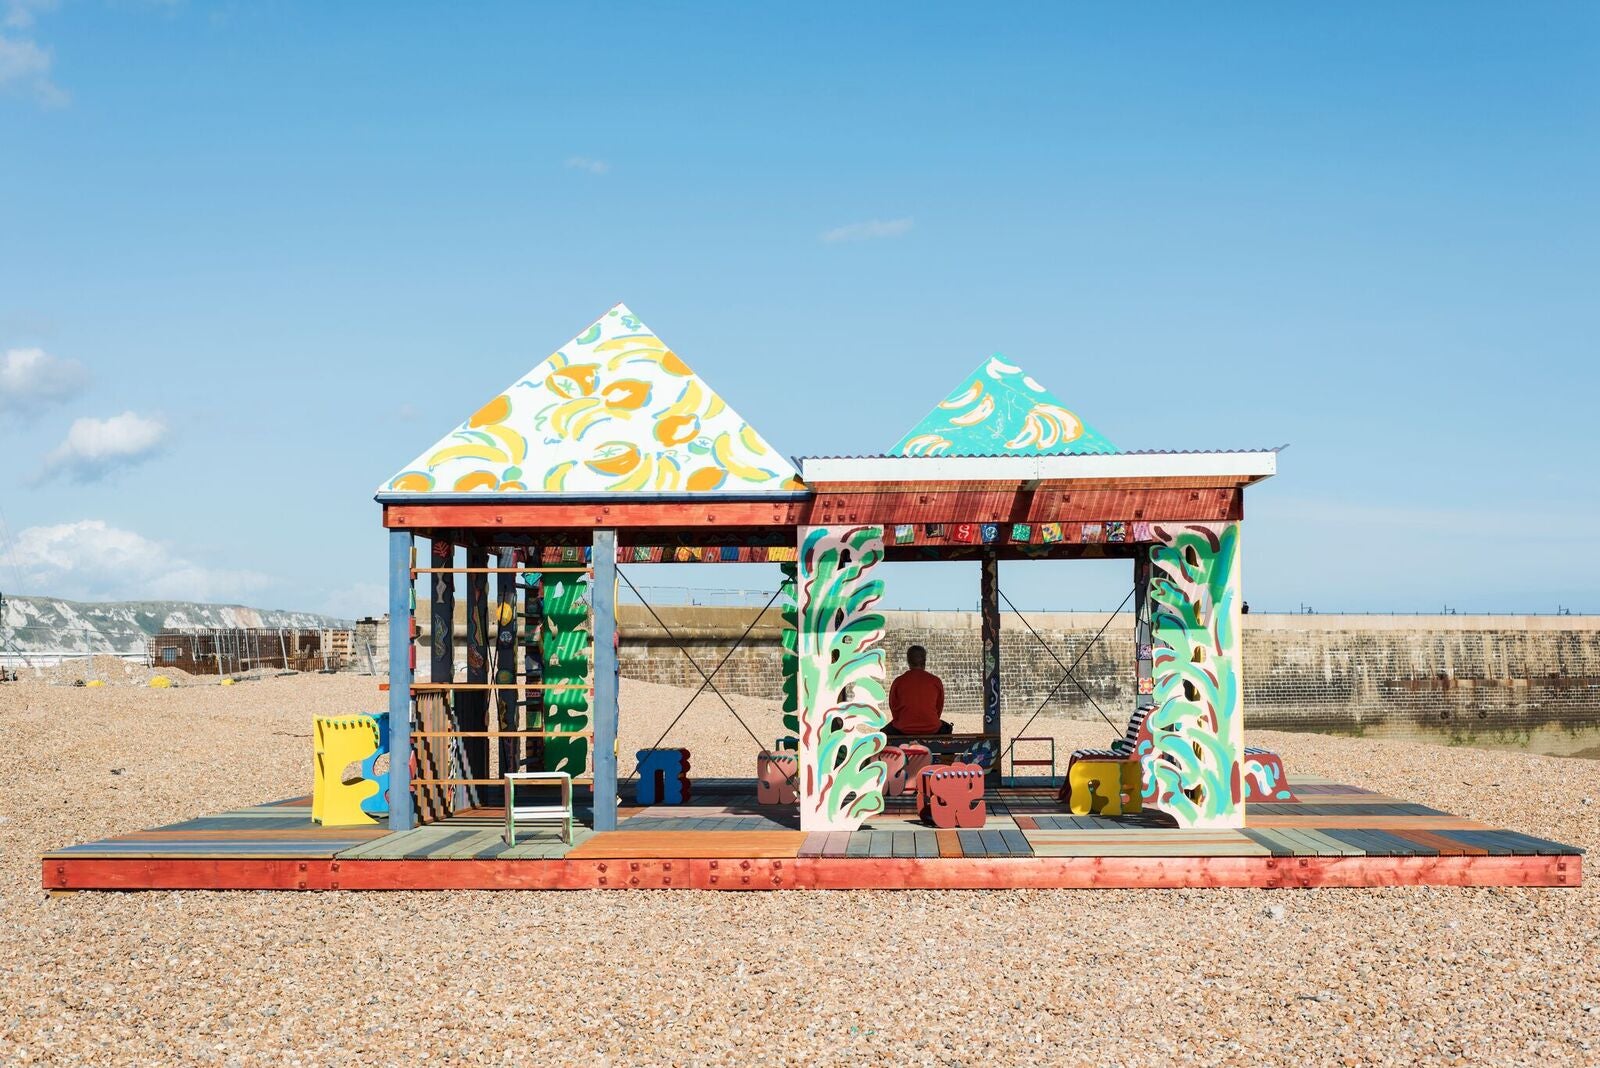 Sol Calero’s ‘Casa Anacaona‘ is a vibrant beach cabana, both artwork and public space